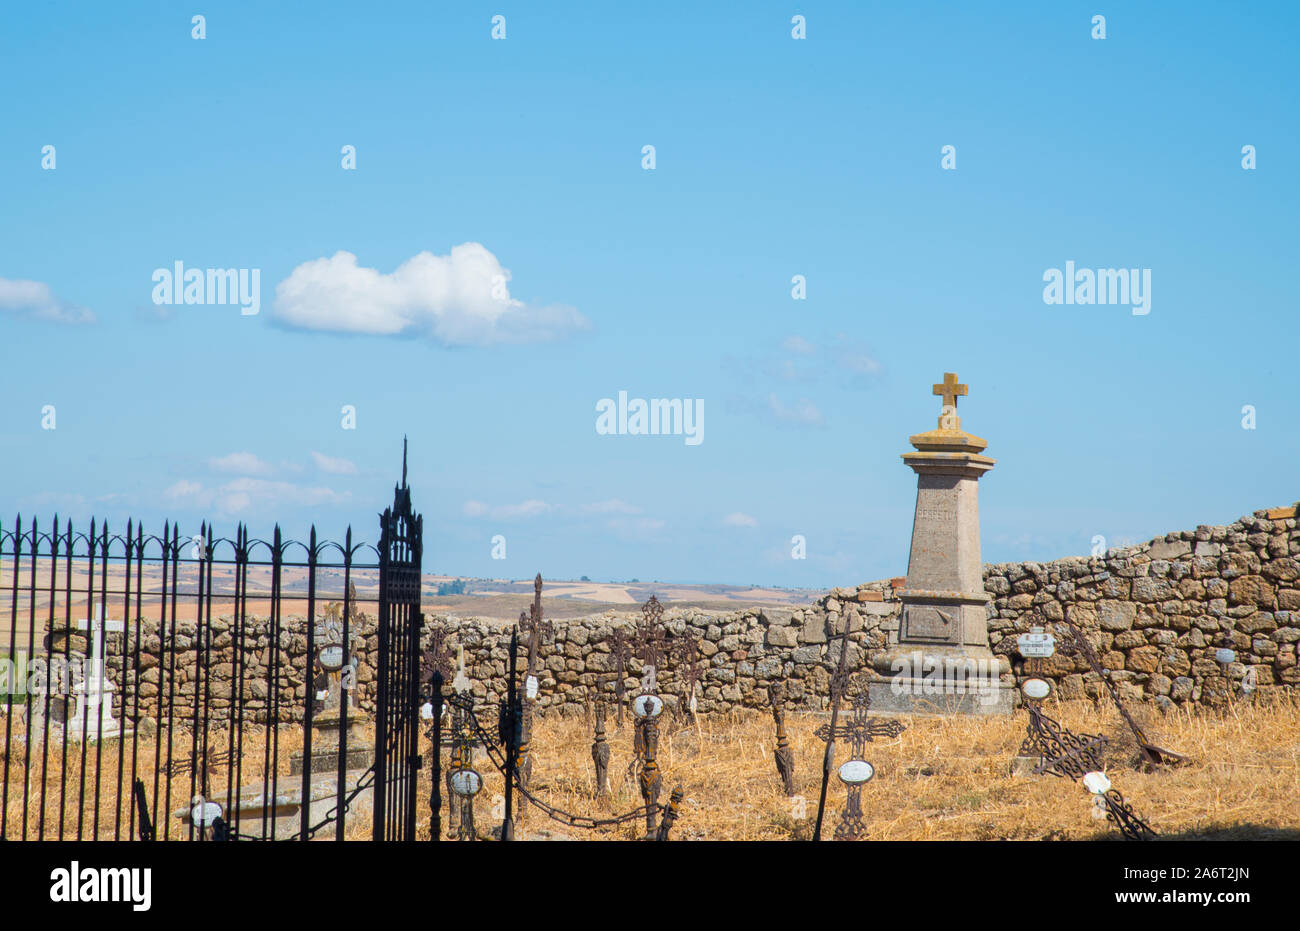 Graveyard. Moron de Almazan, Soria province, Castilla Leon, Spain. Stock Photo